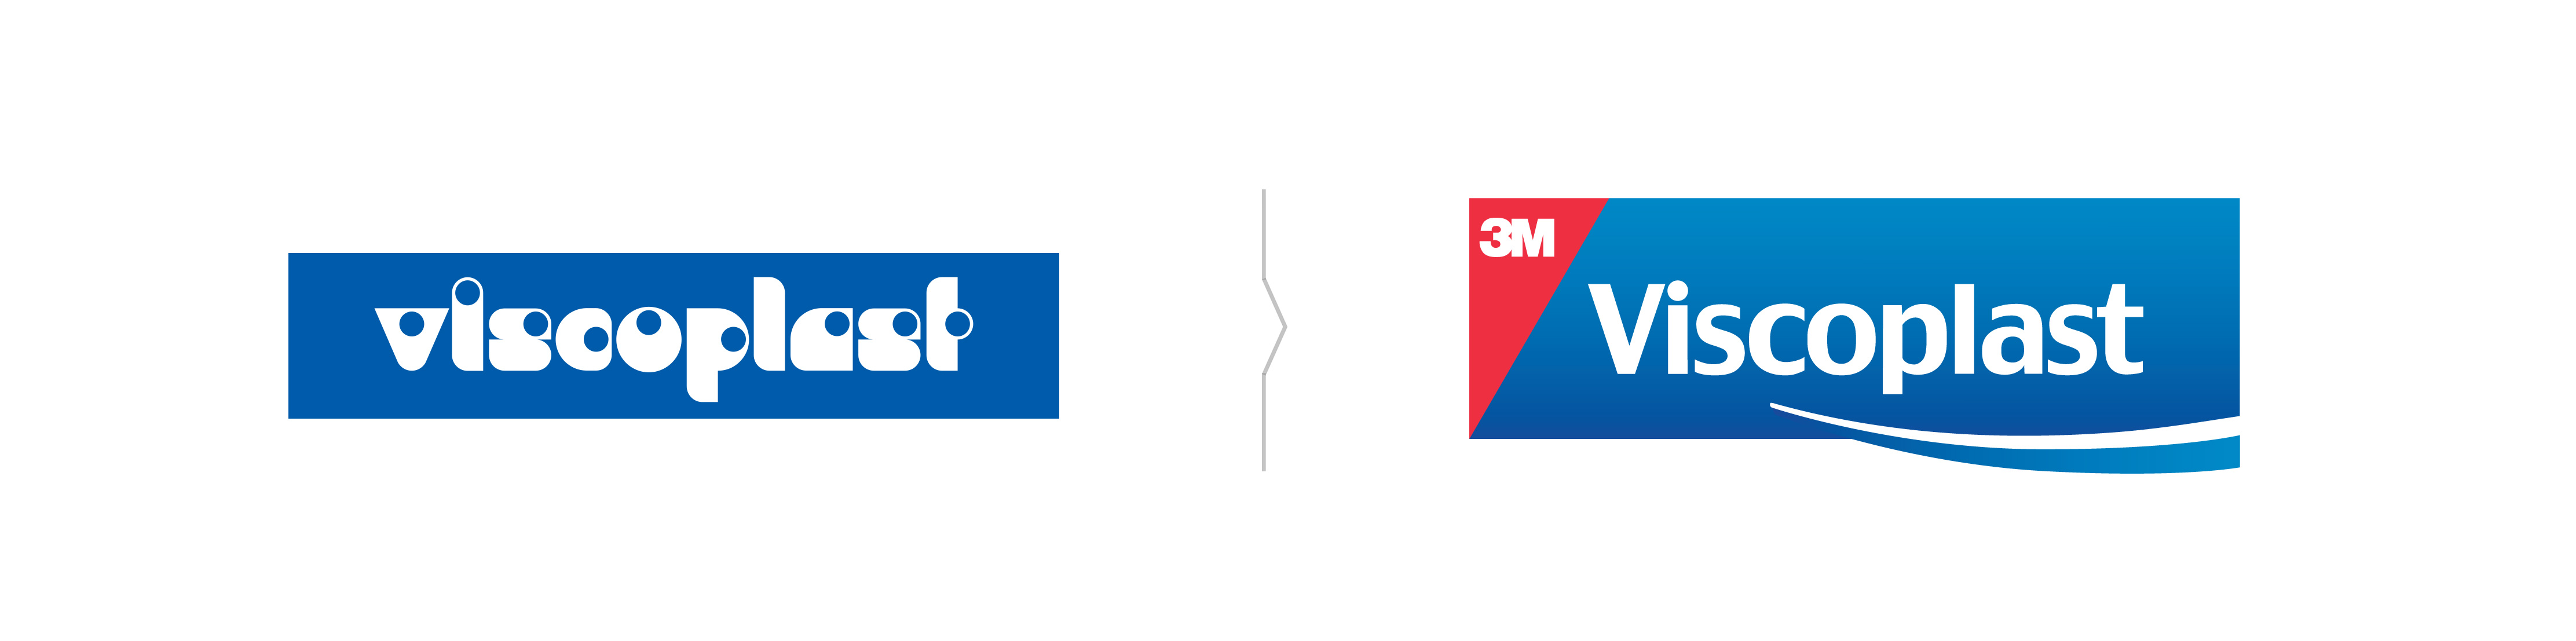 Rebranding marki Viscoplast - stare logo i nowe logo zaprojektowane przez PND Futura